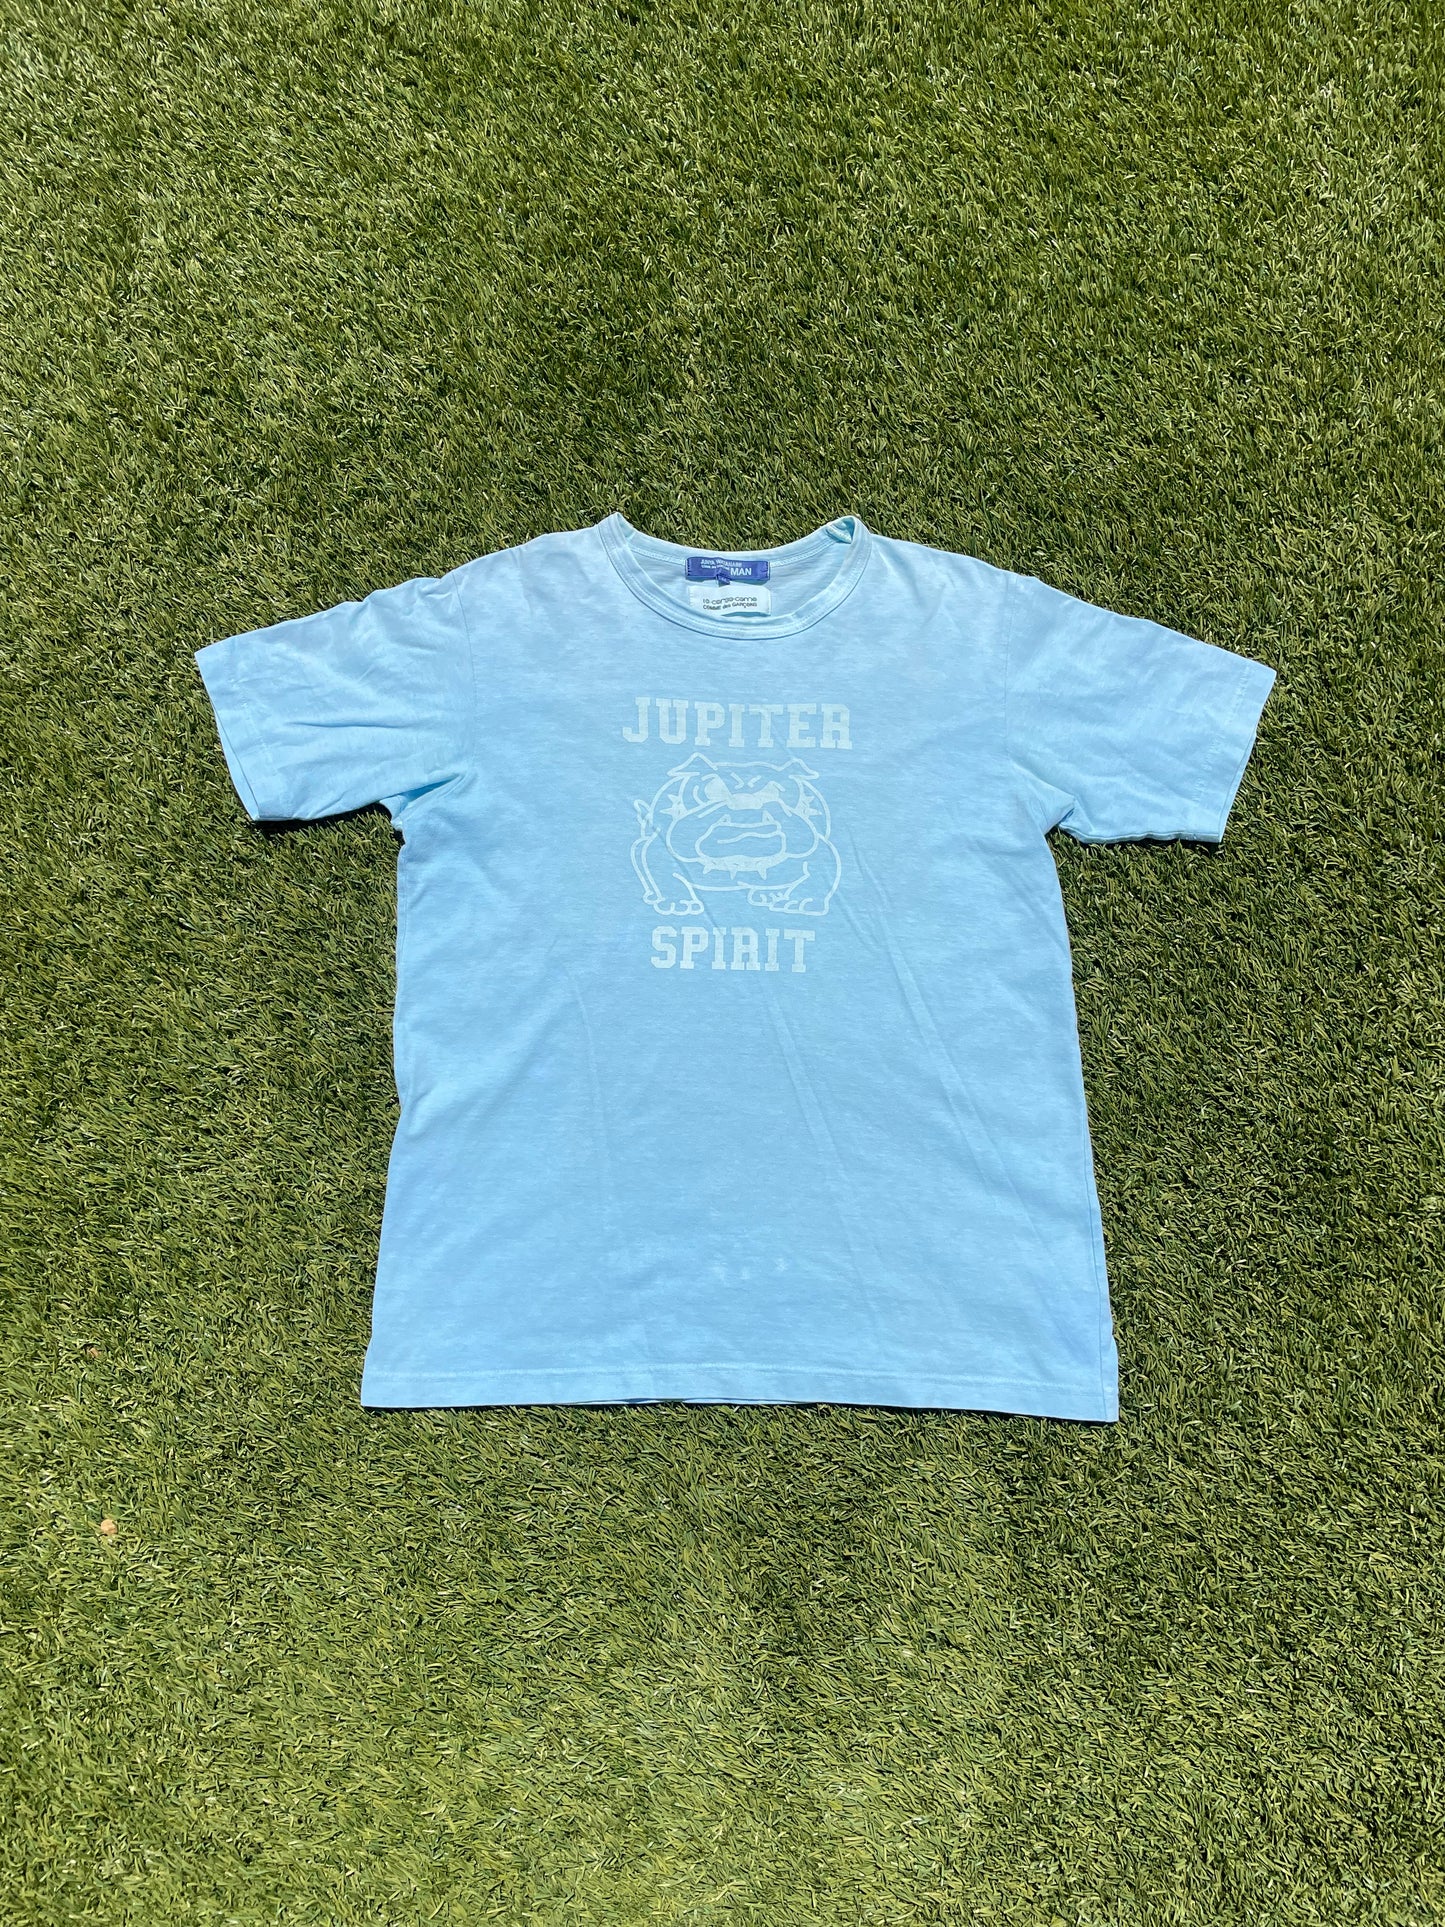 FW11 Junya Watanabe 10 Corso Como ‘Jupiter Spirit’ Bulldog T-Shirt